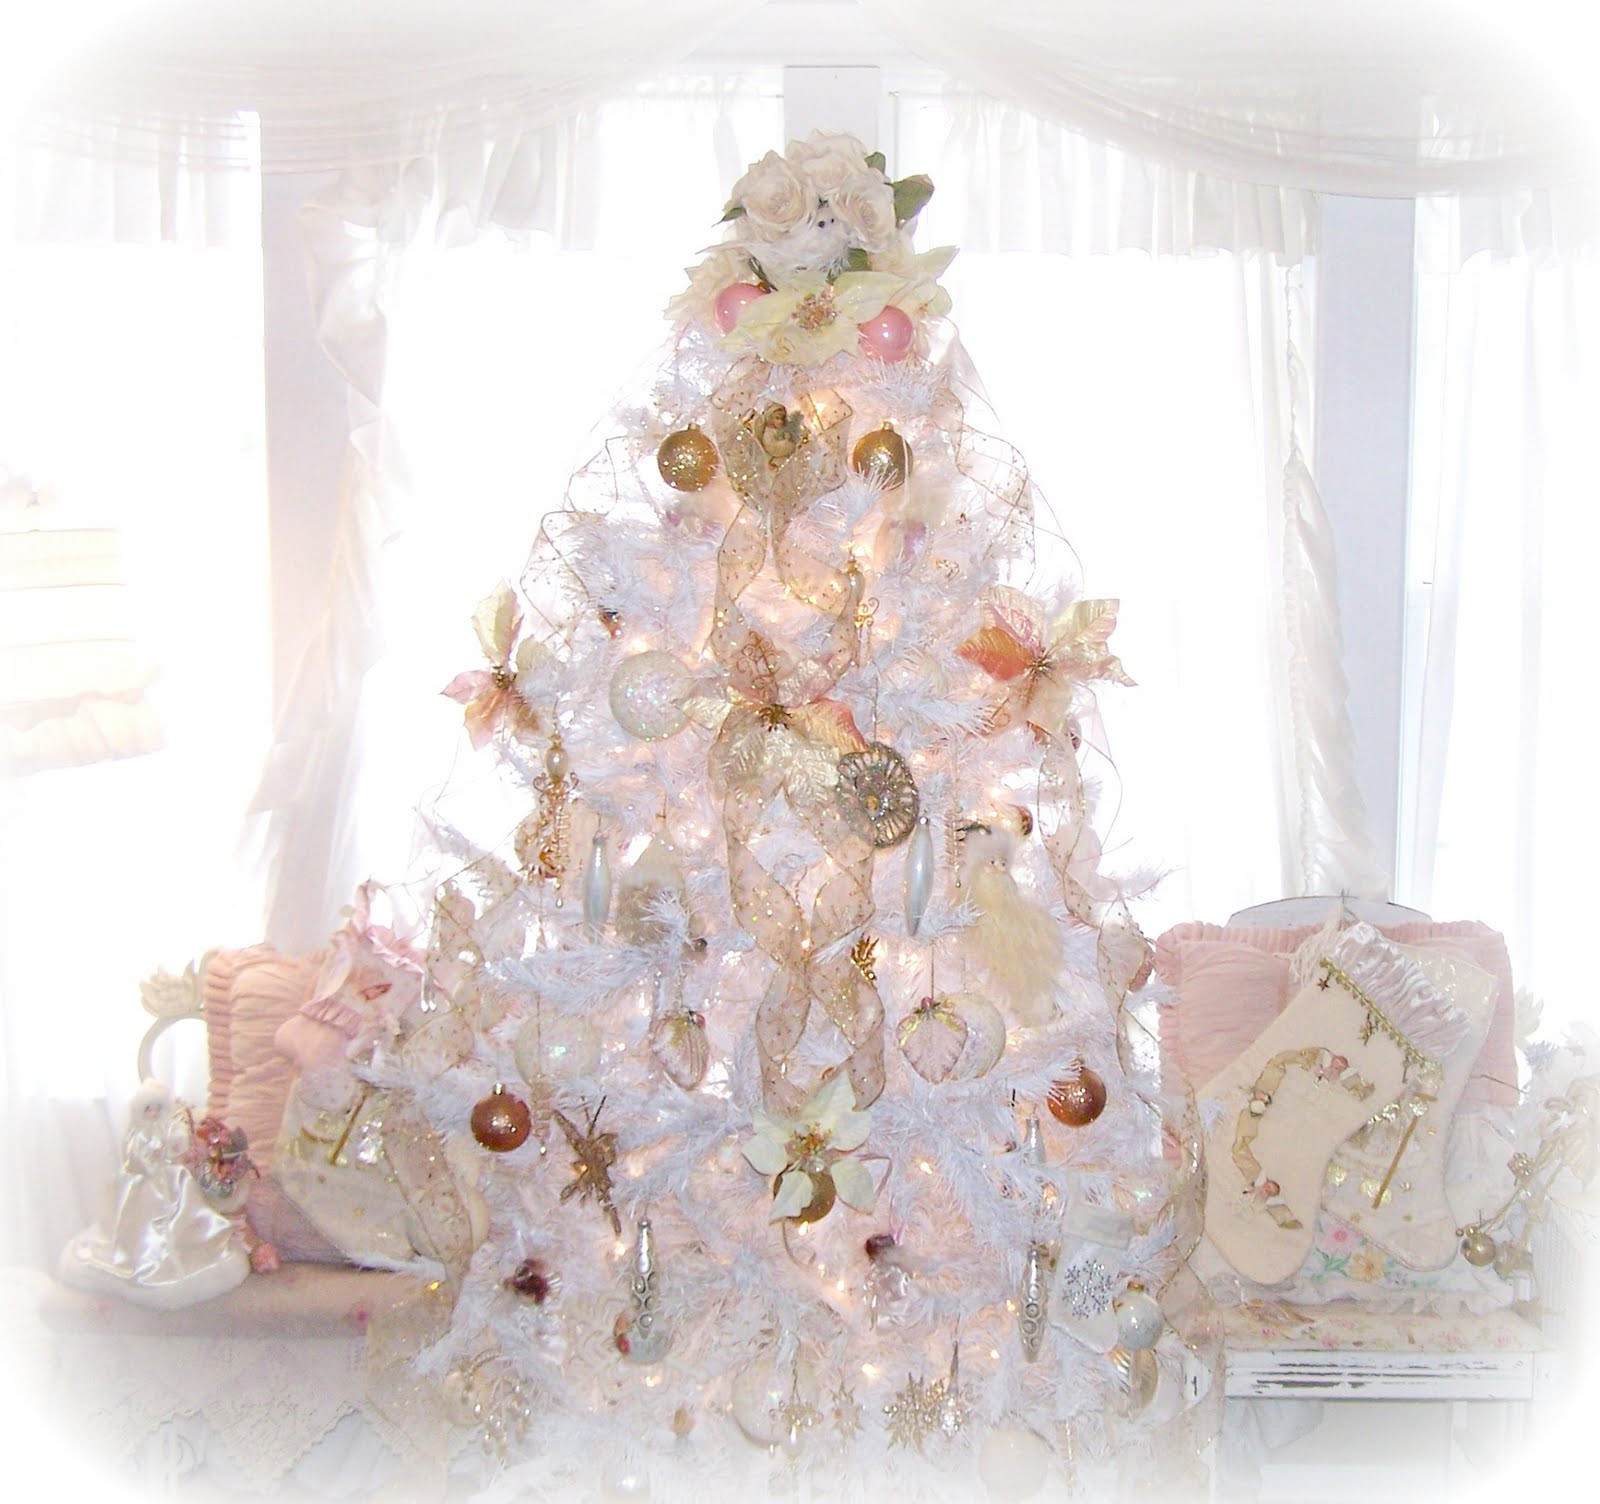 Shabby Chic Christmas Trees
 Olivia s Romantic Home Shabby Chic White Christmas Tree